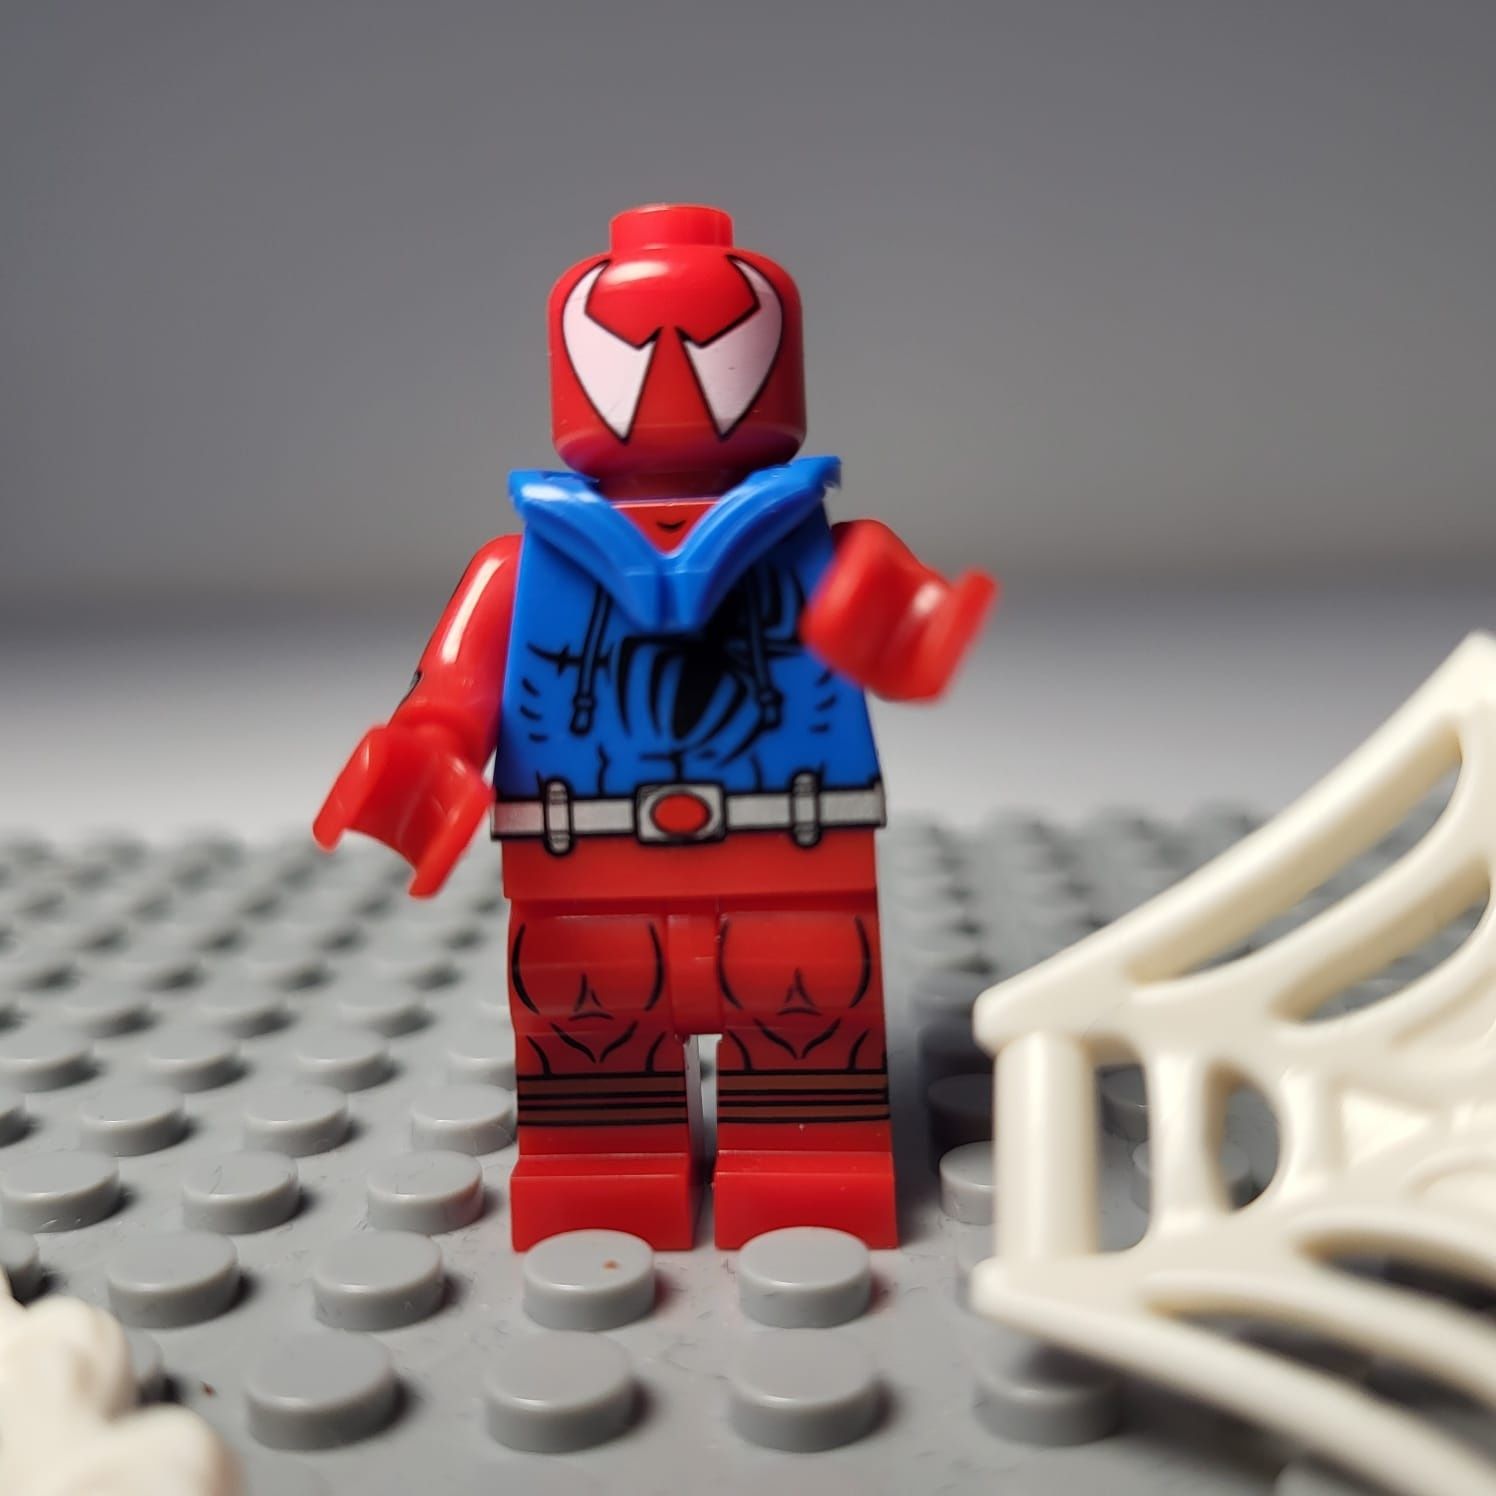 Spiderman | Marvel | Gratis Naklejka Lego